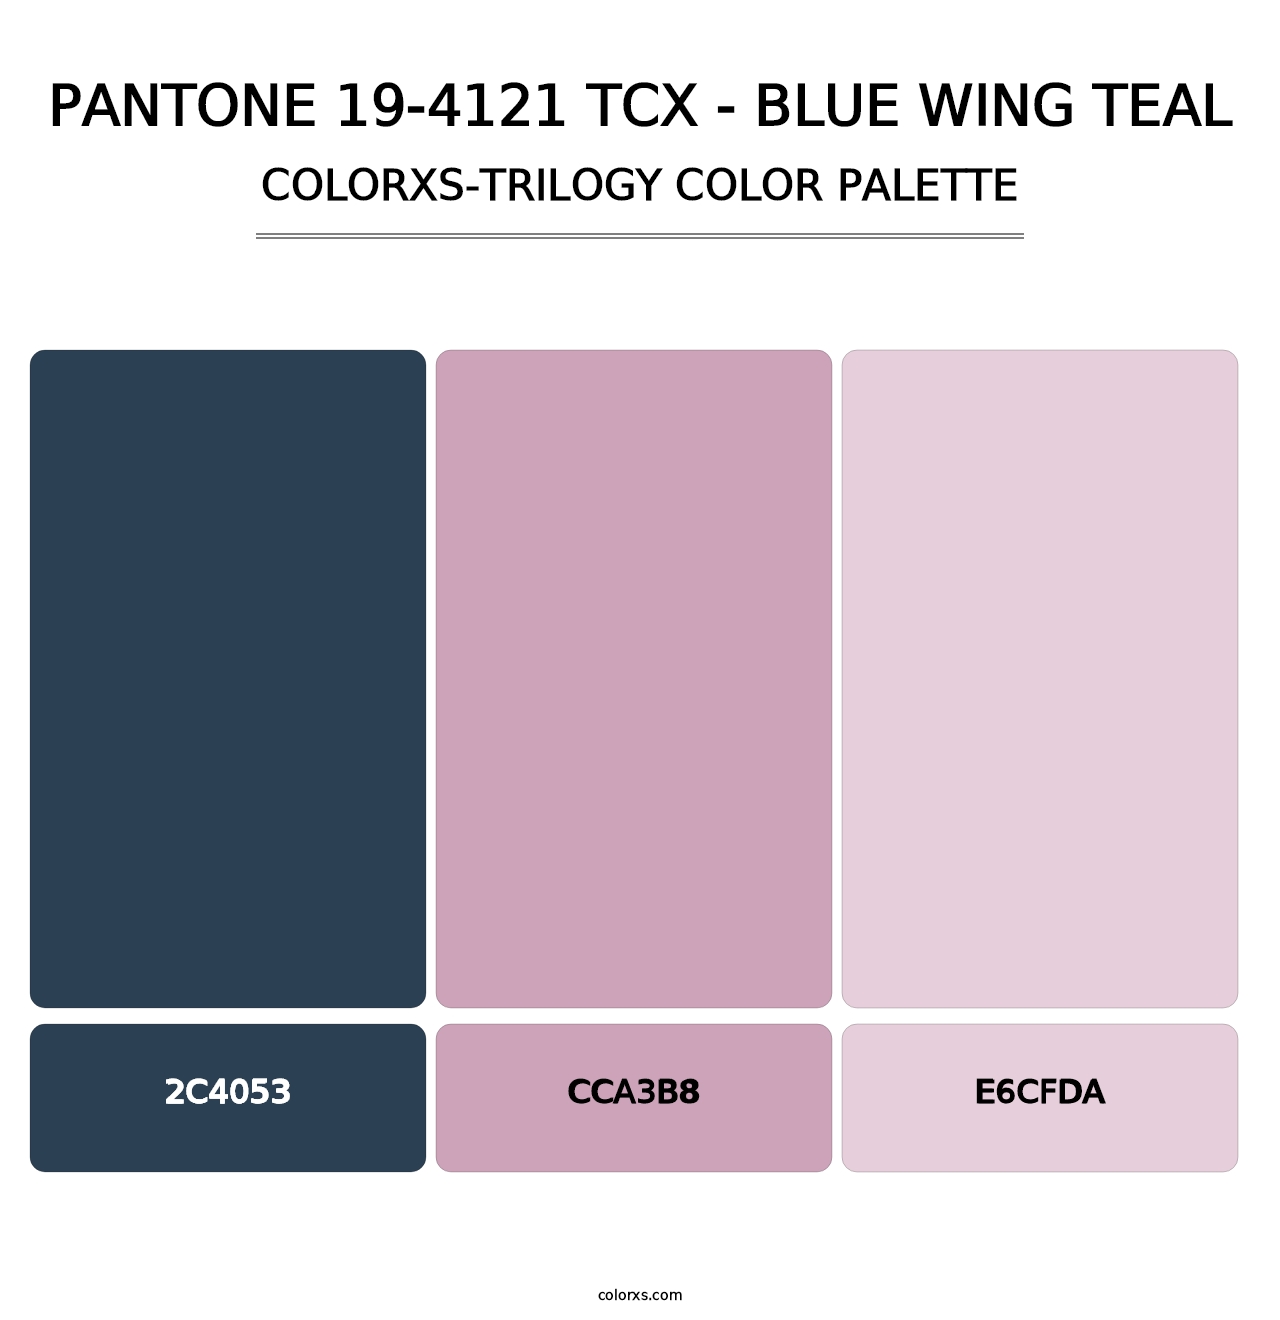 PANTONE 19-4121 TCX - Blue Wing Teal - Colorxs Trilogy Palette